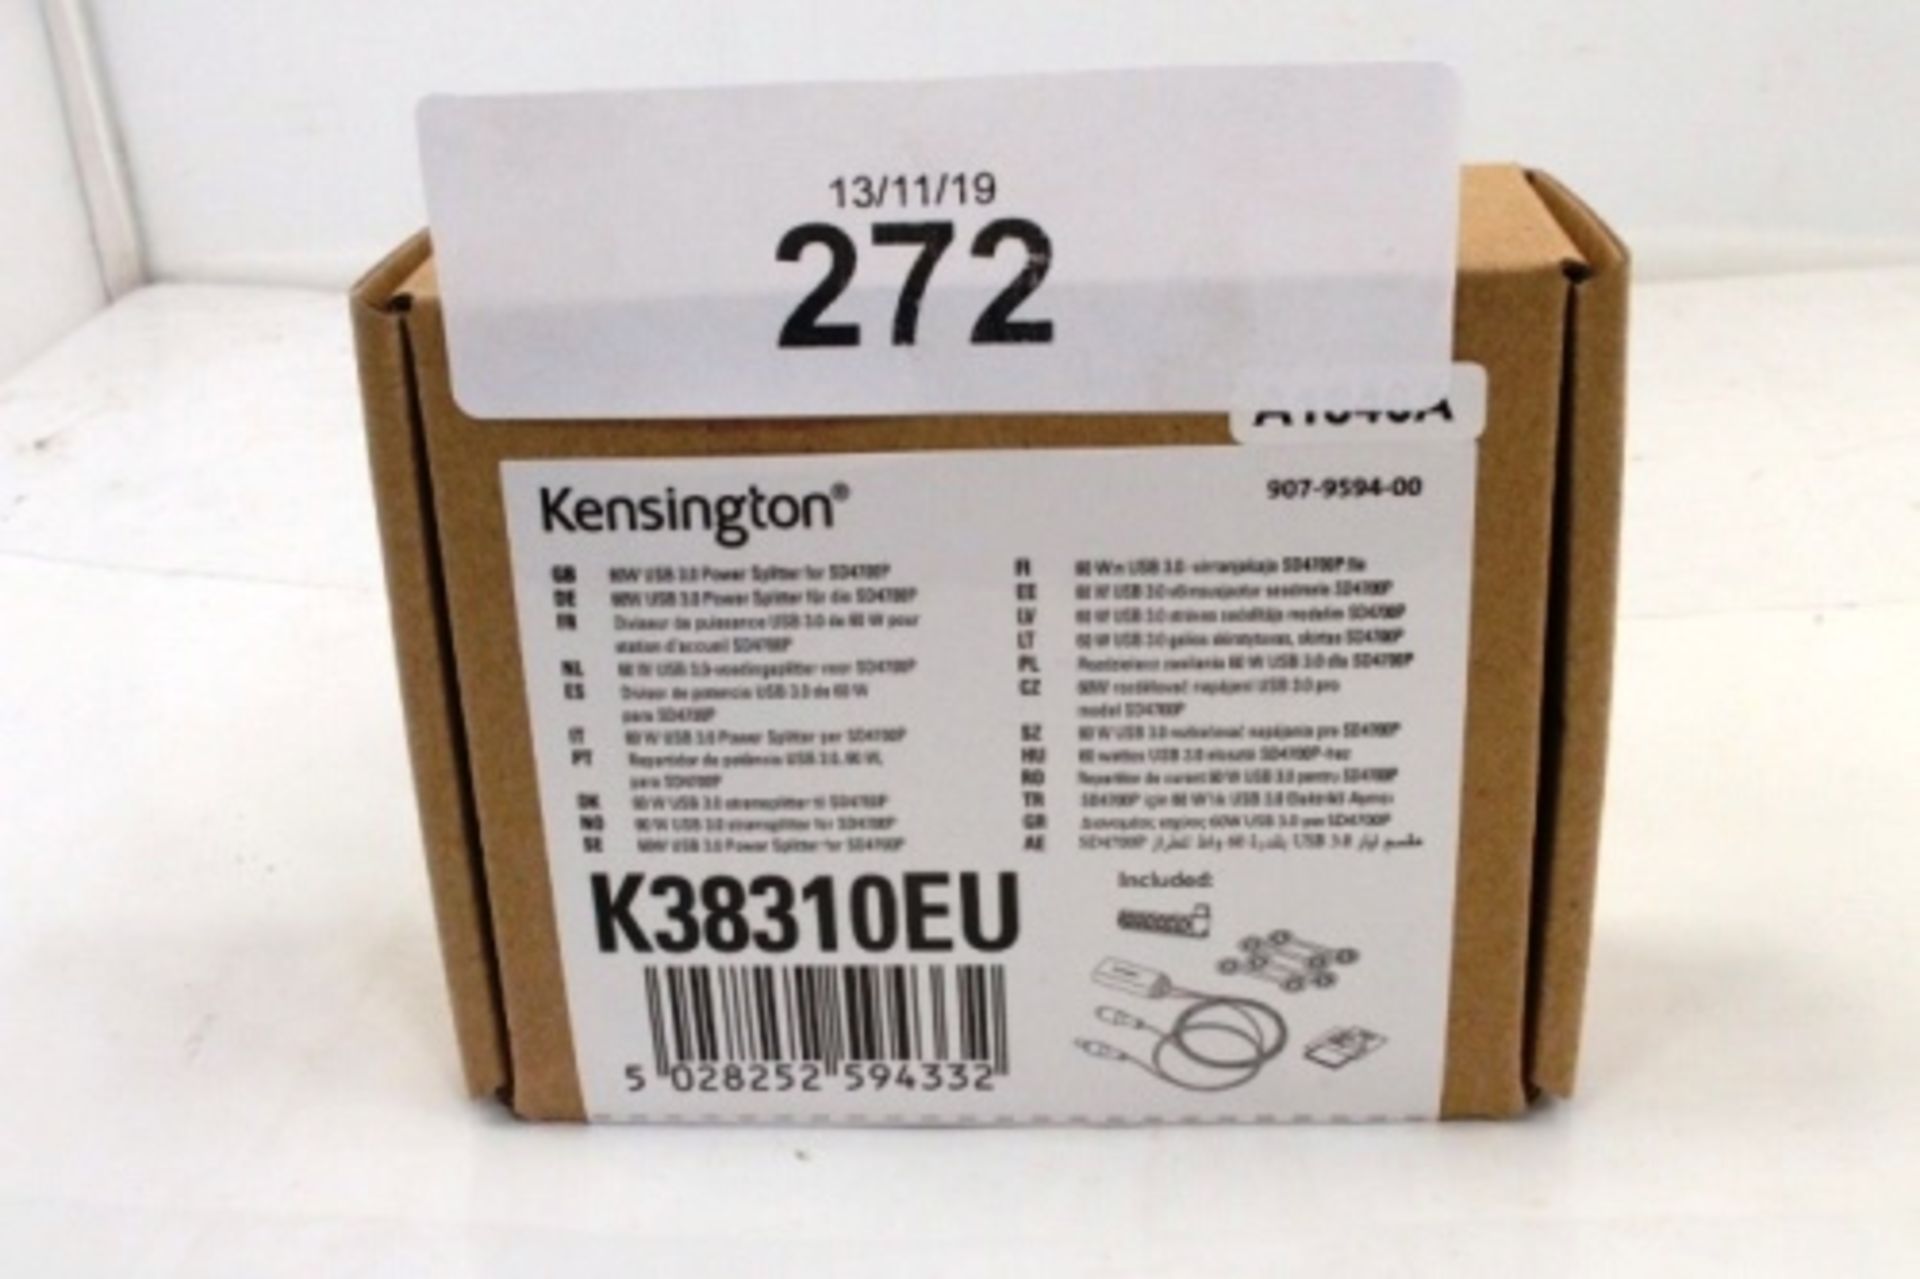 1 x Kensington 60W USB 3.0 power splitter, model K38310EU, RRP £38.00 - Sealed new in box (C1)